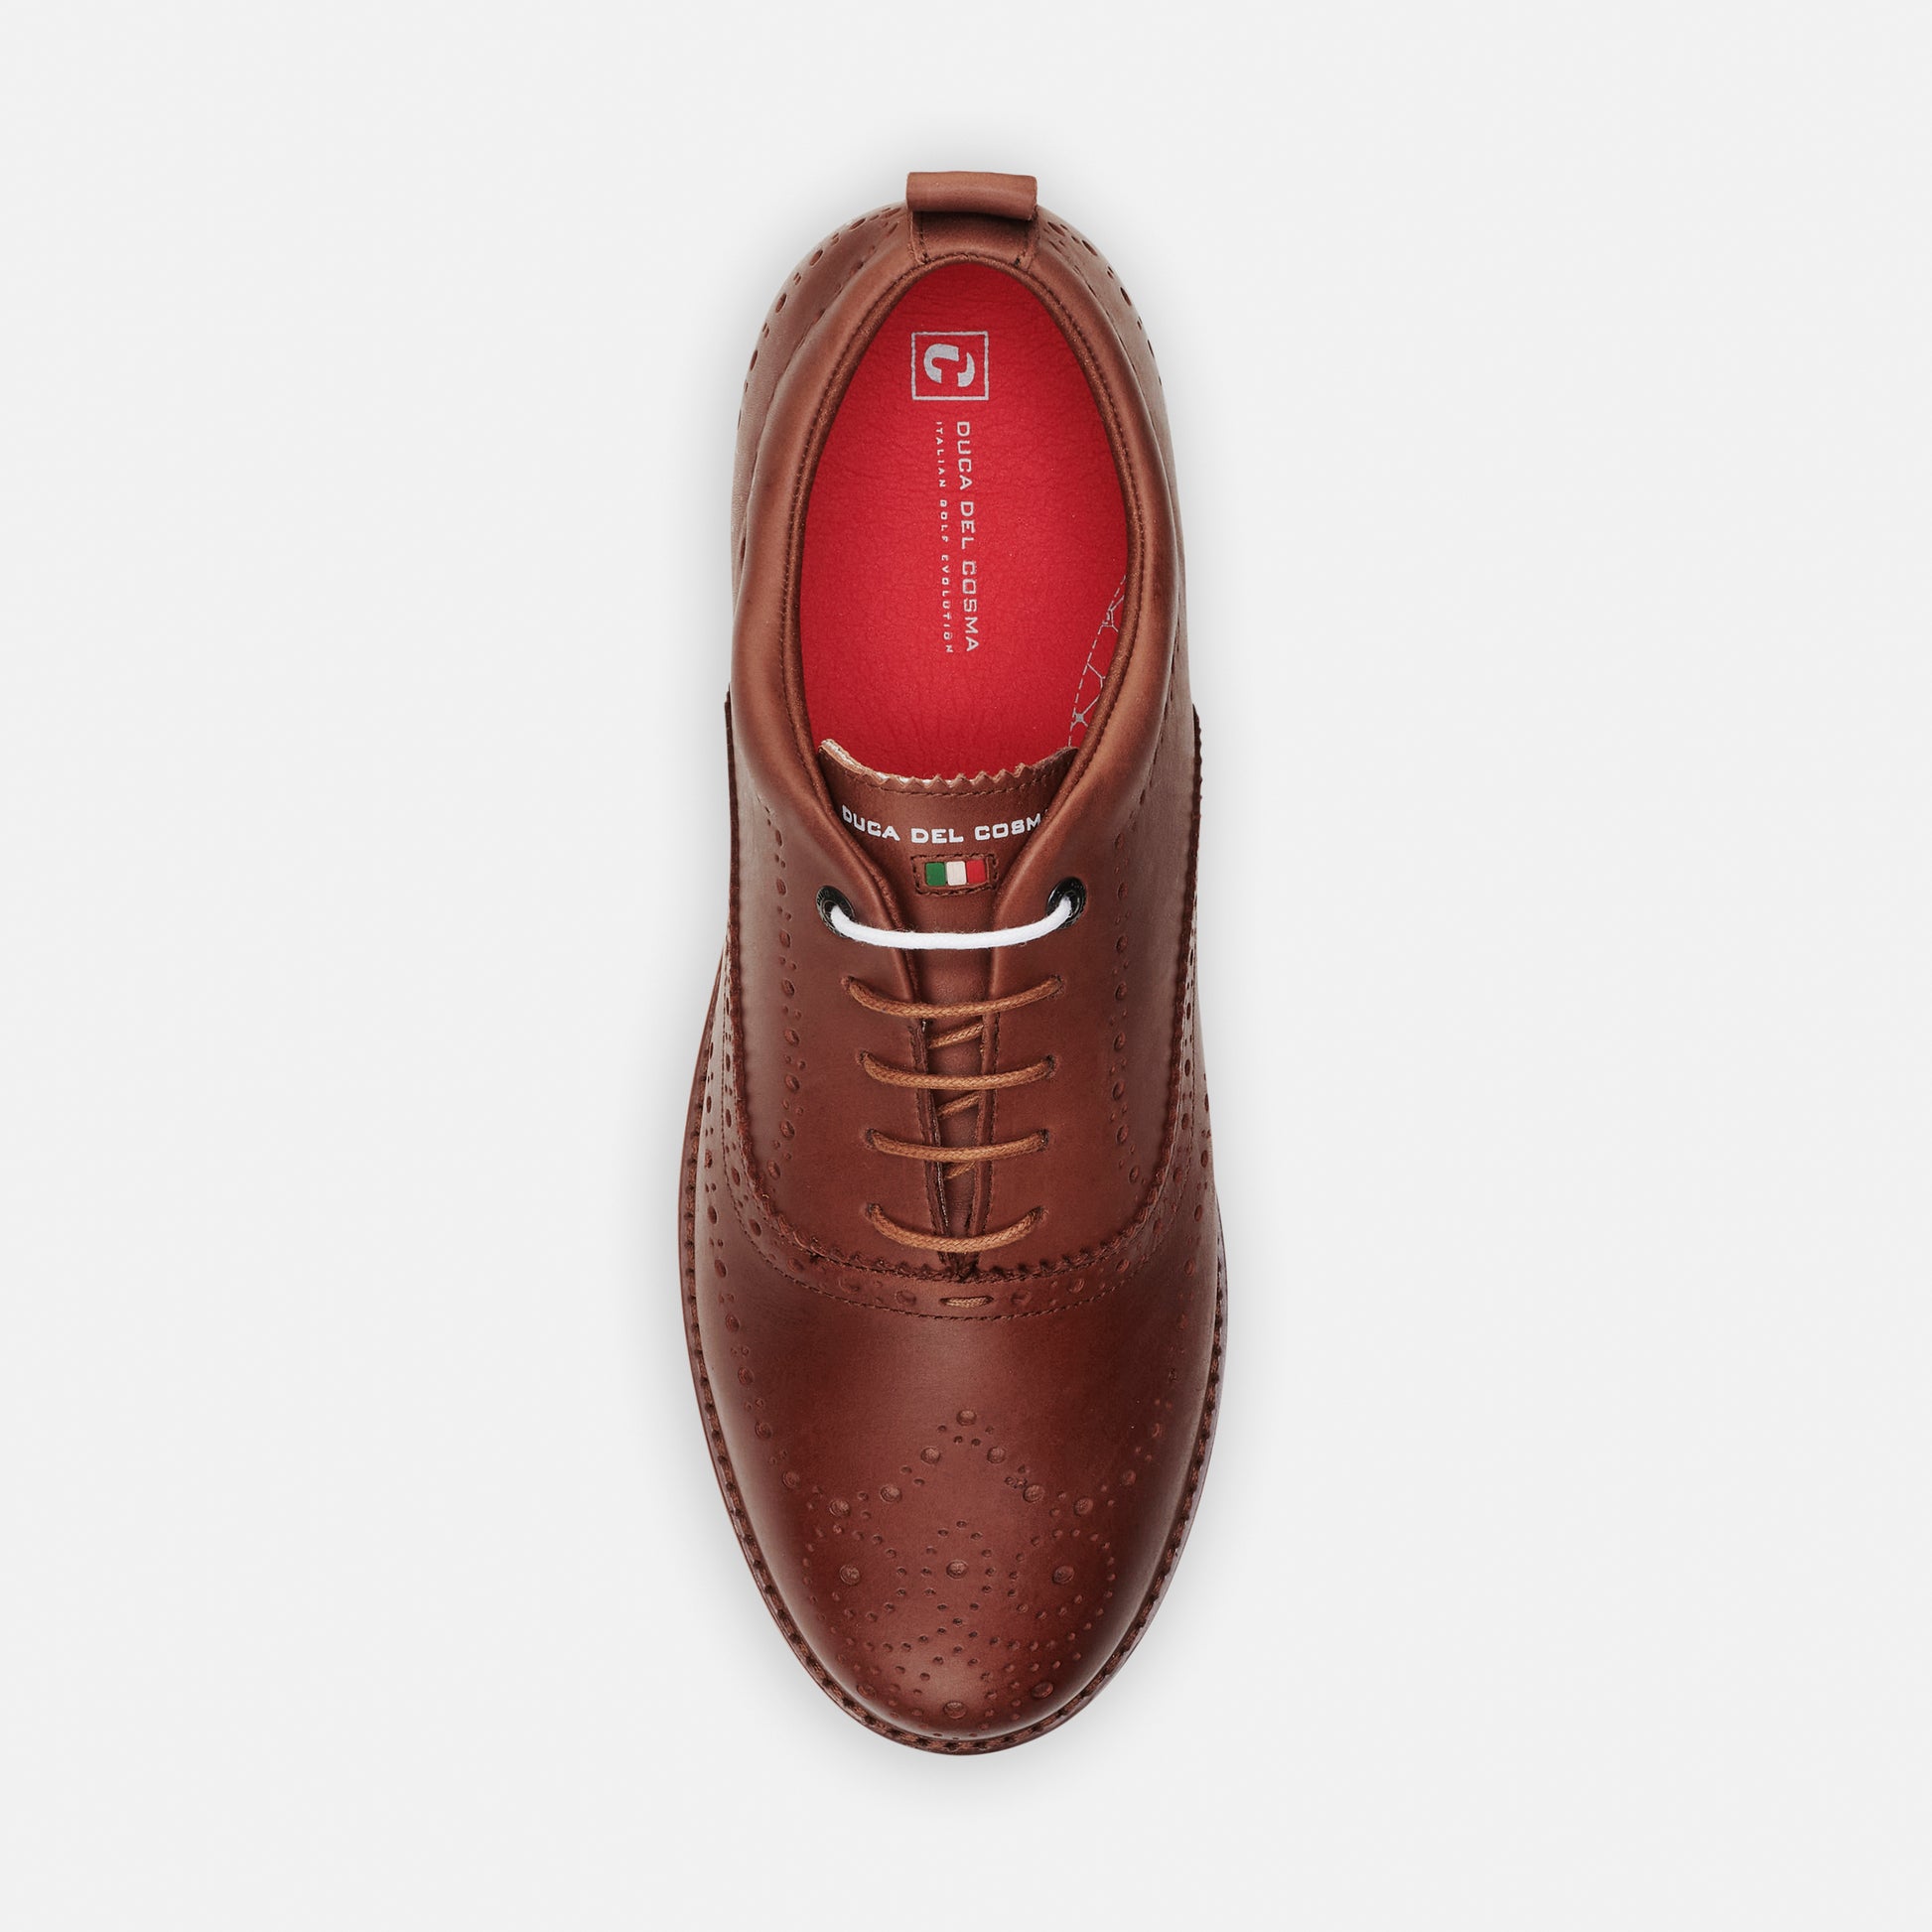 Churchill brown men's golf shoe from duca del cosma